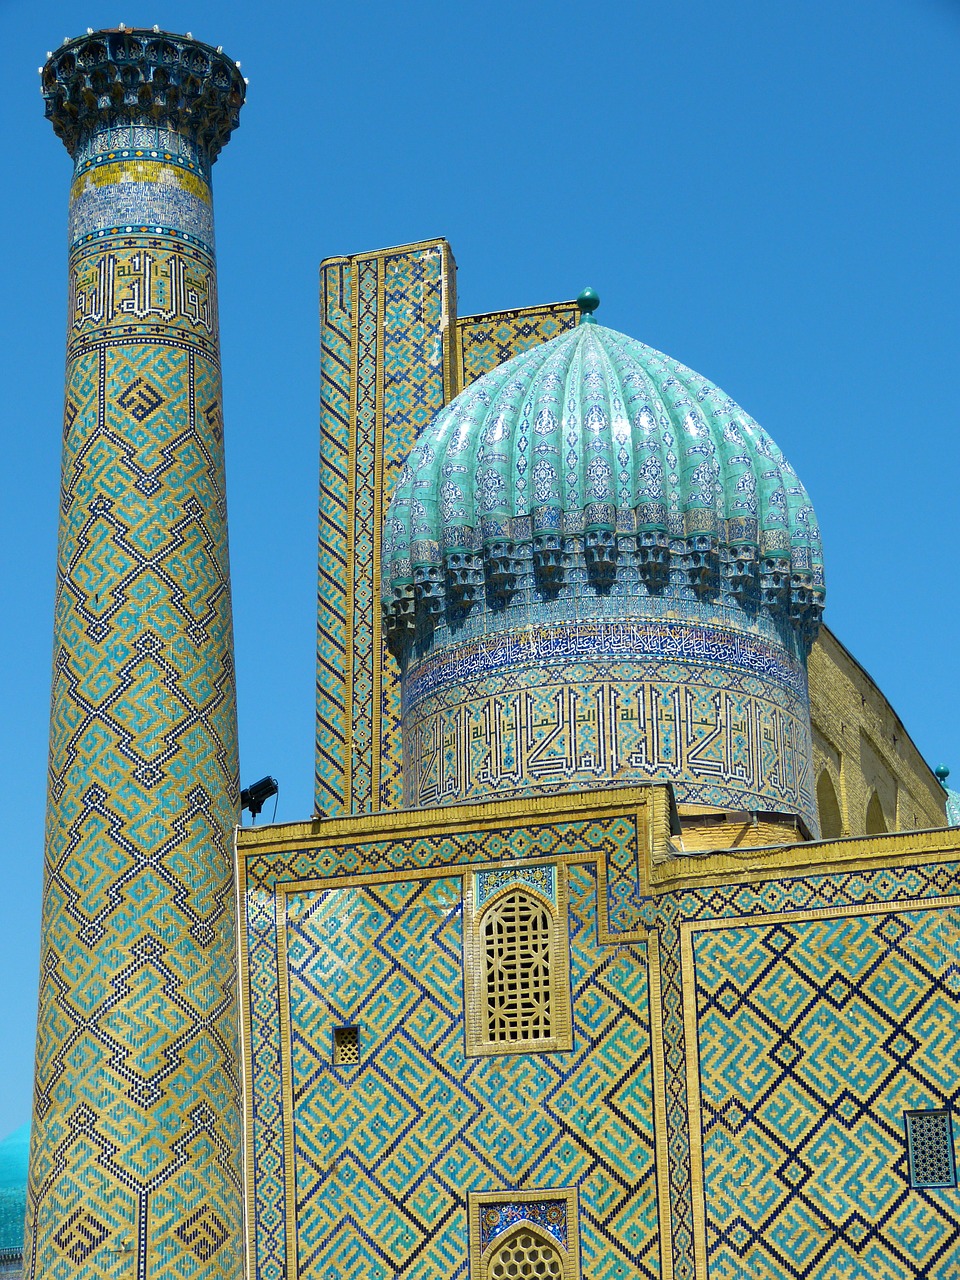 Samarkandas, Registruojantis Kvadratas, Uzbekistanas, Sher Dor Madrassah, Smėlio Vieta, Erdvė, Madrėjos, Minaretas, Turkis, Majolika